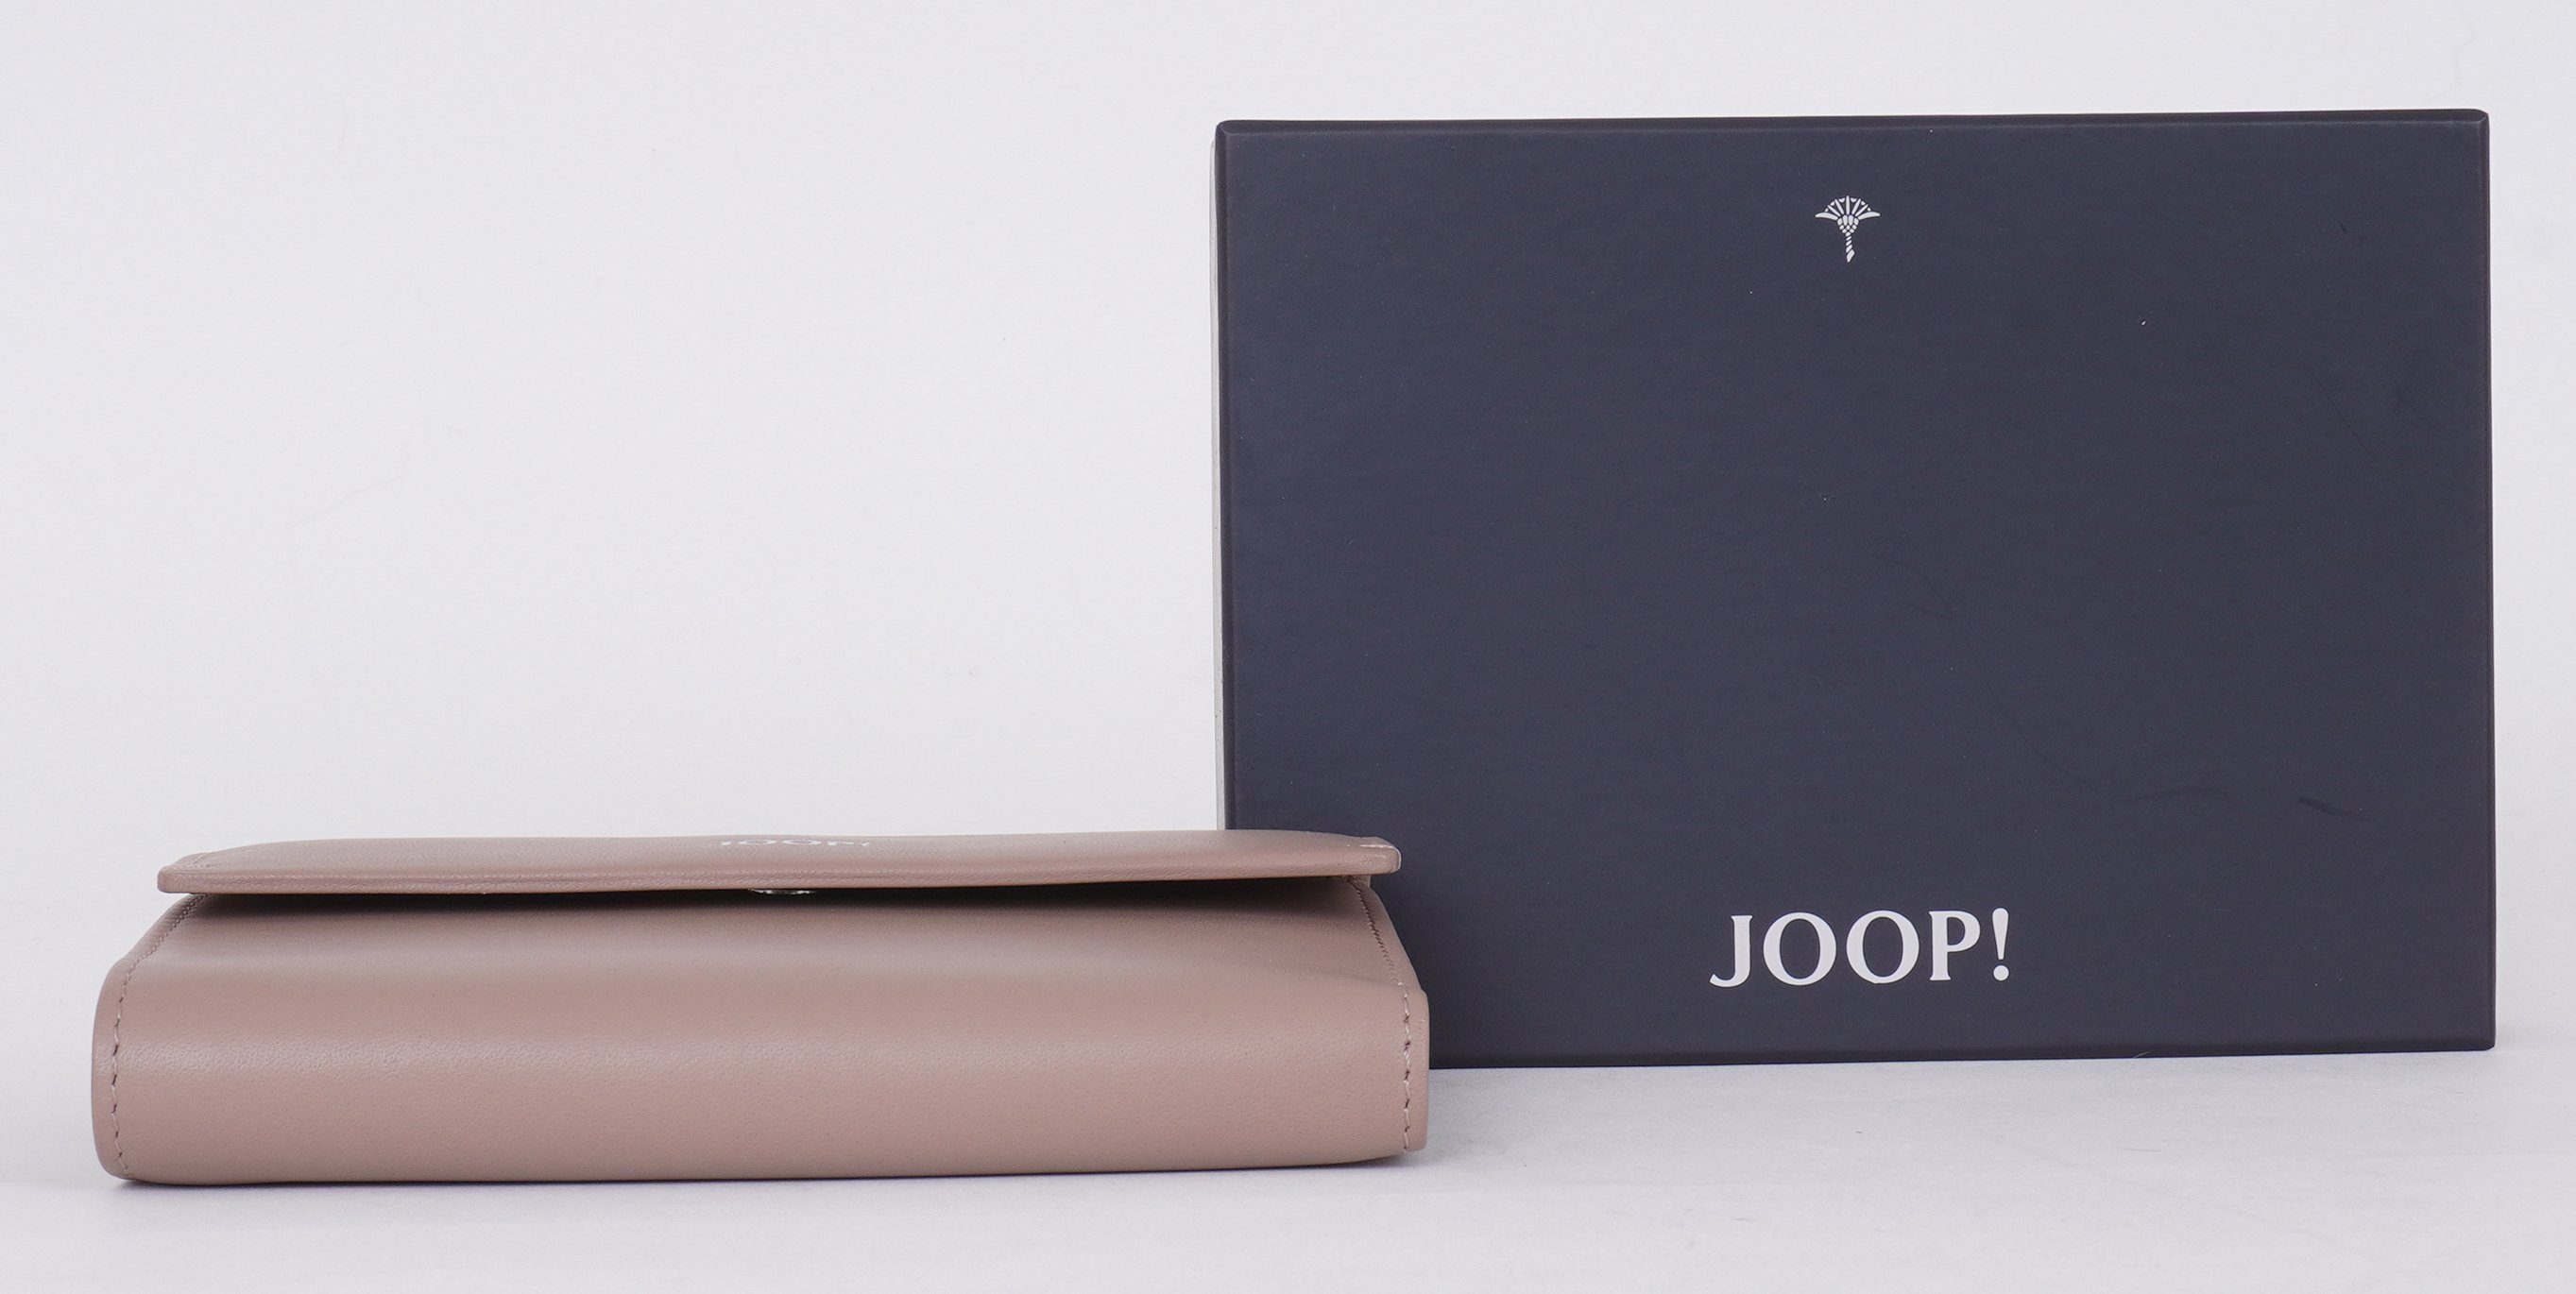 Geldbörse cosma sofisticato Joop! Design mh10f, rosa in 1.0 schlichtem purse